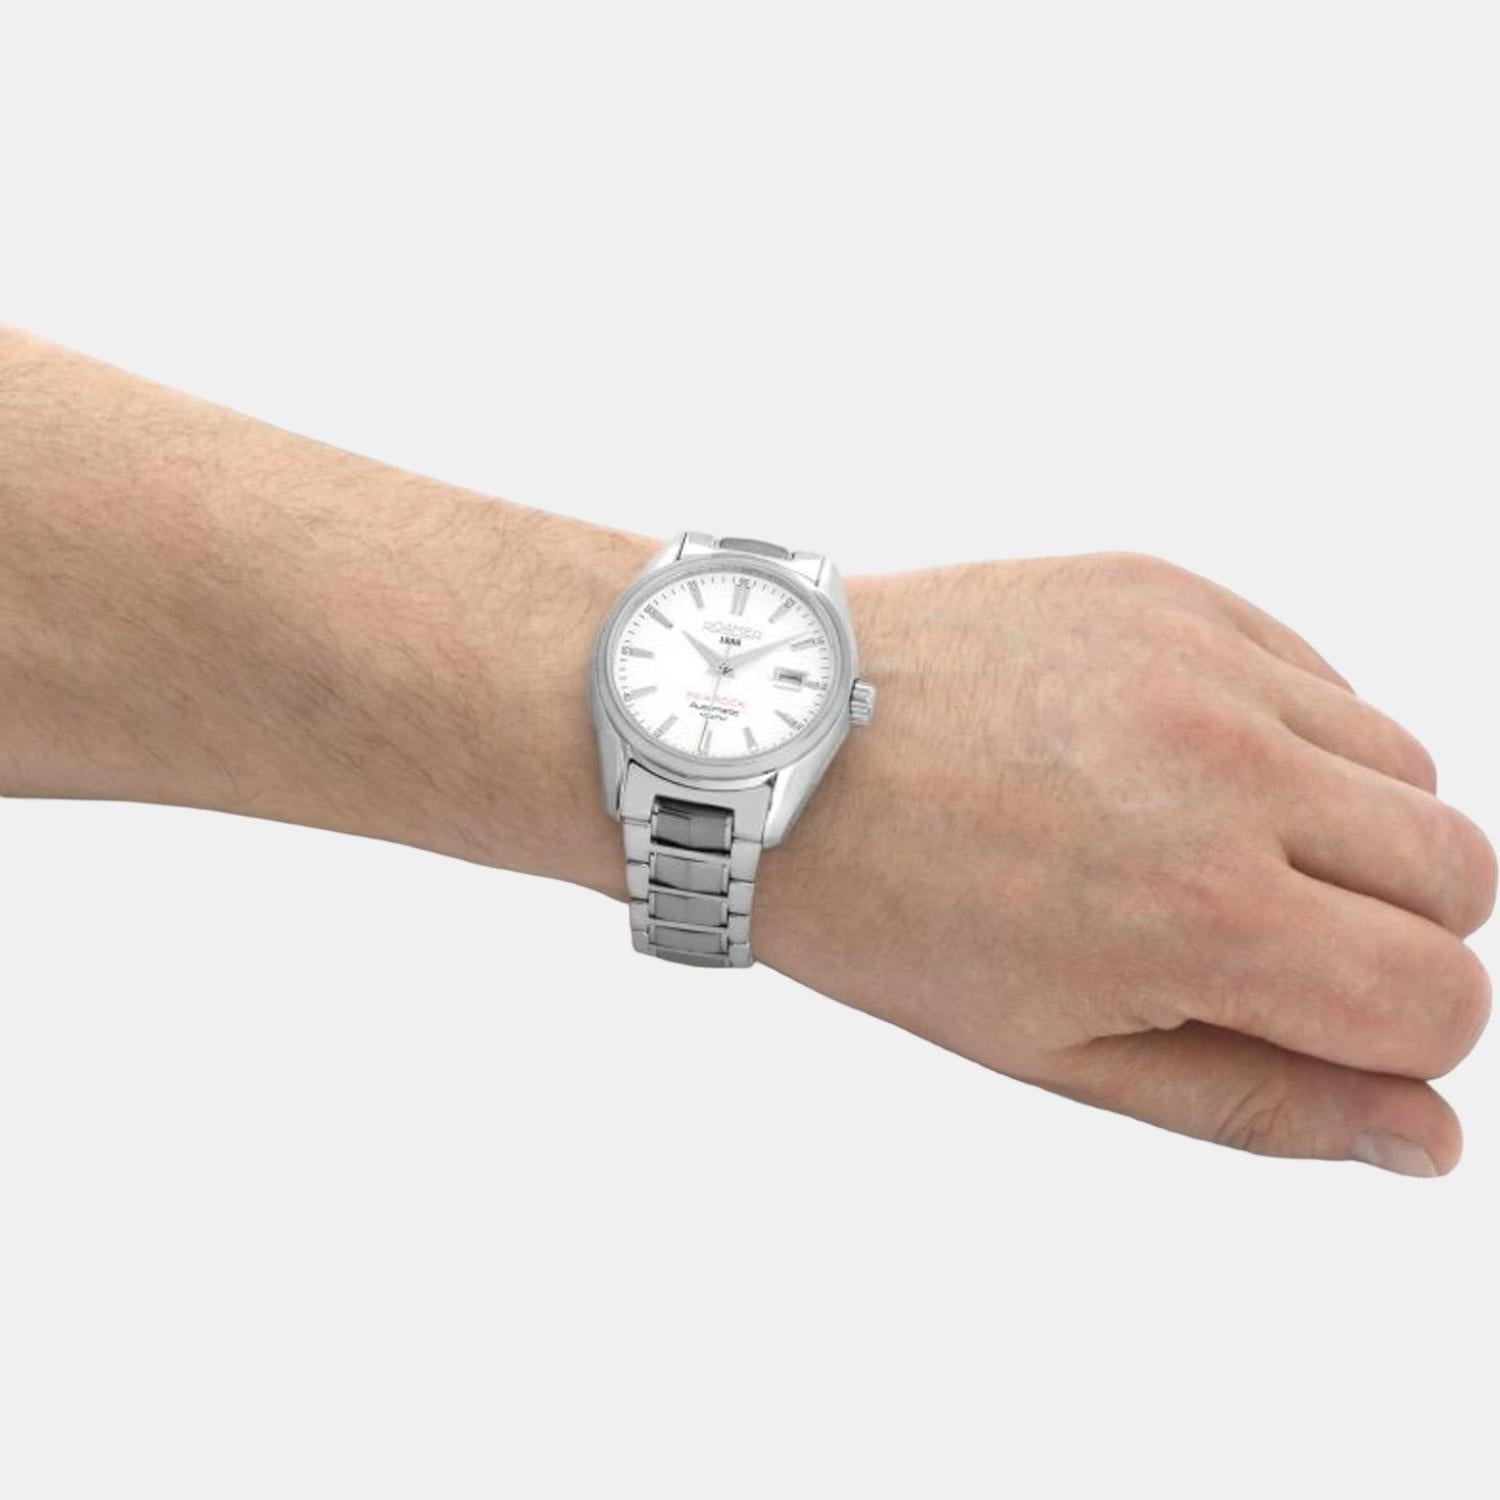 roamer-stainless-steel-white-analog-male-watch-210633-41-25-20